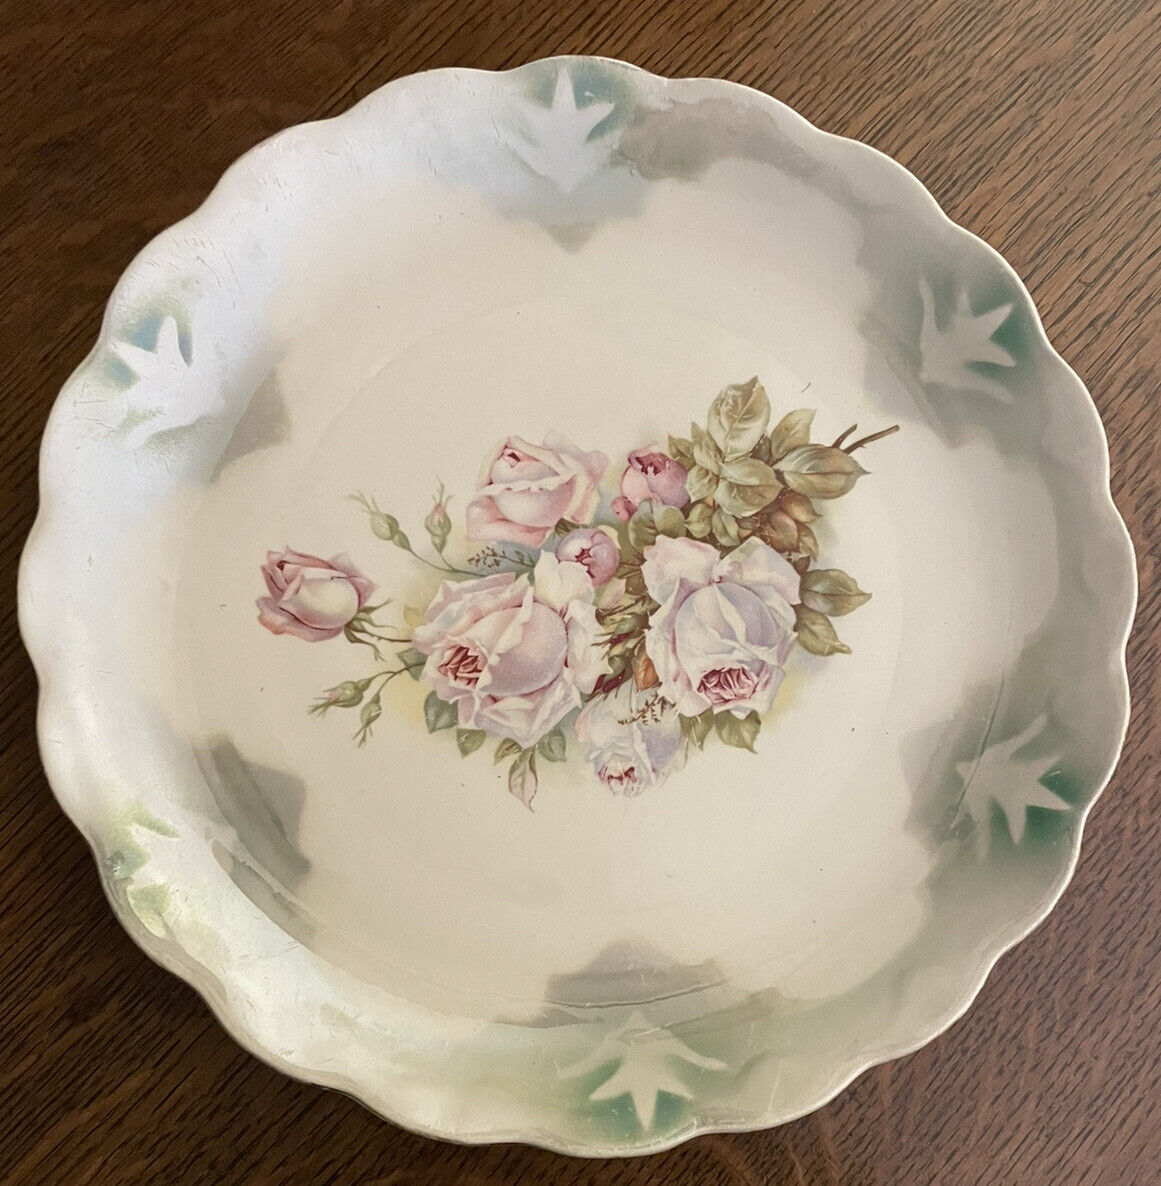 Antique Plate 11” Diameter Floral Rose Design Unmarked 